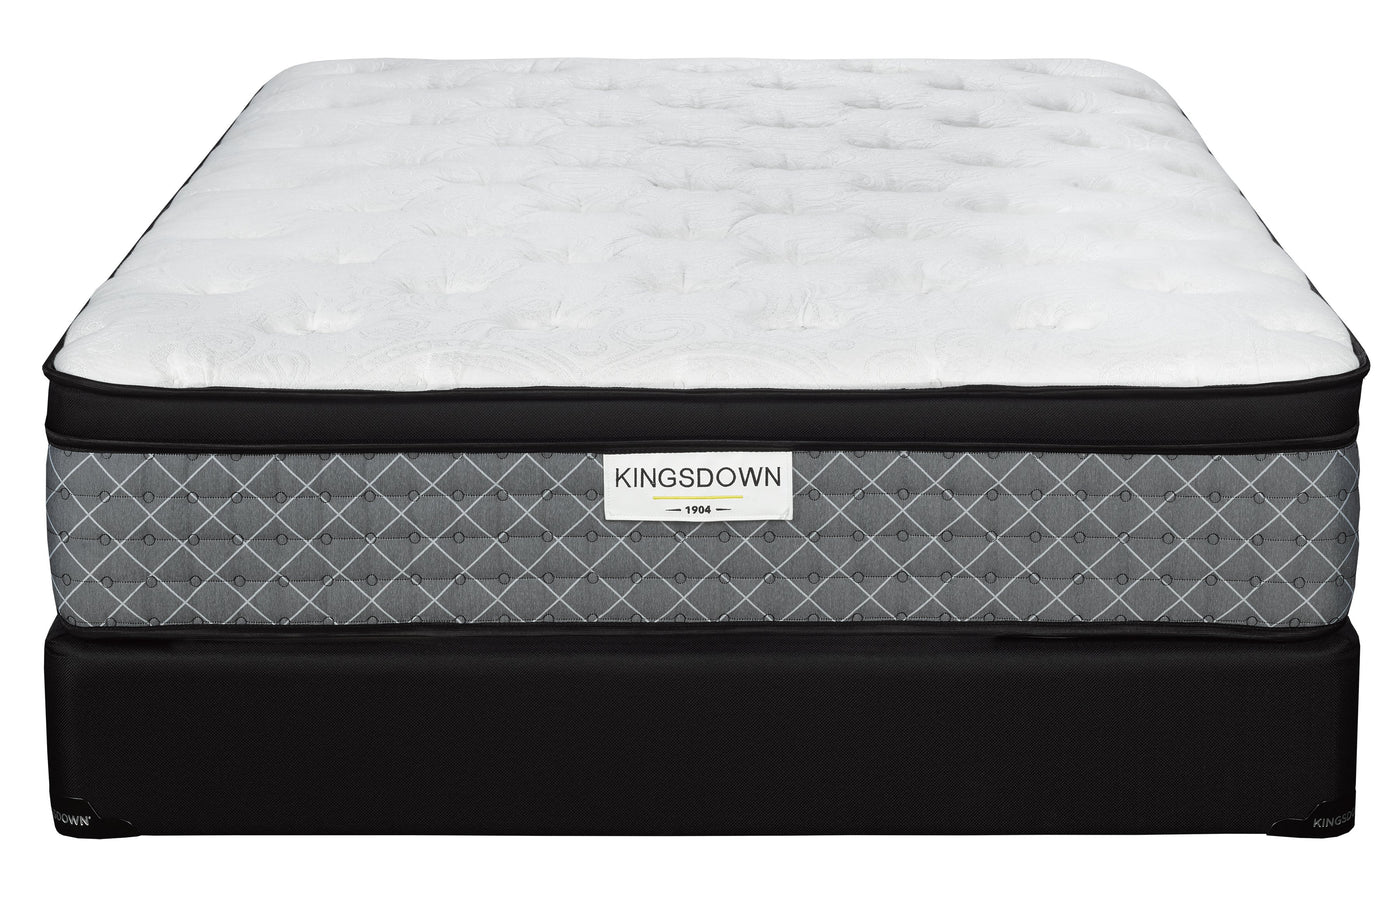 kingsdown mattress canada prices